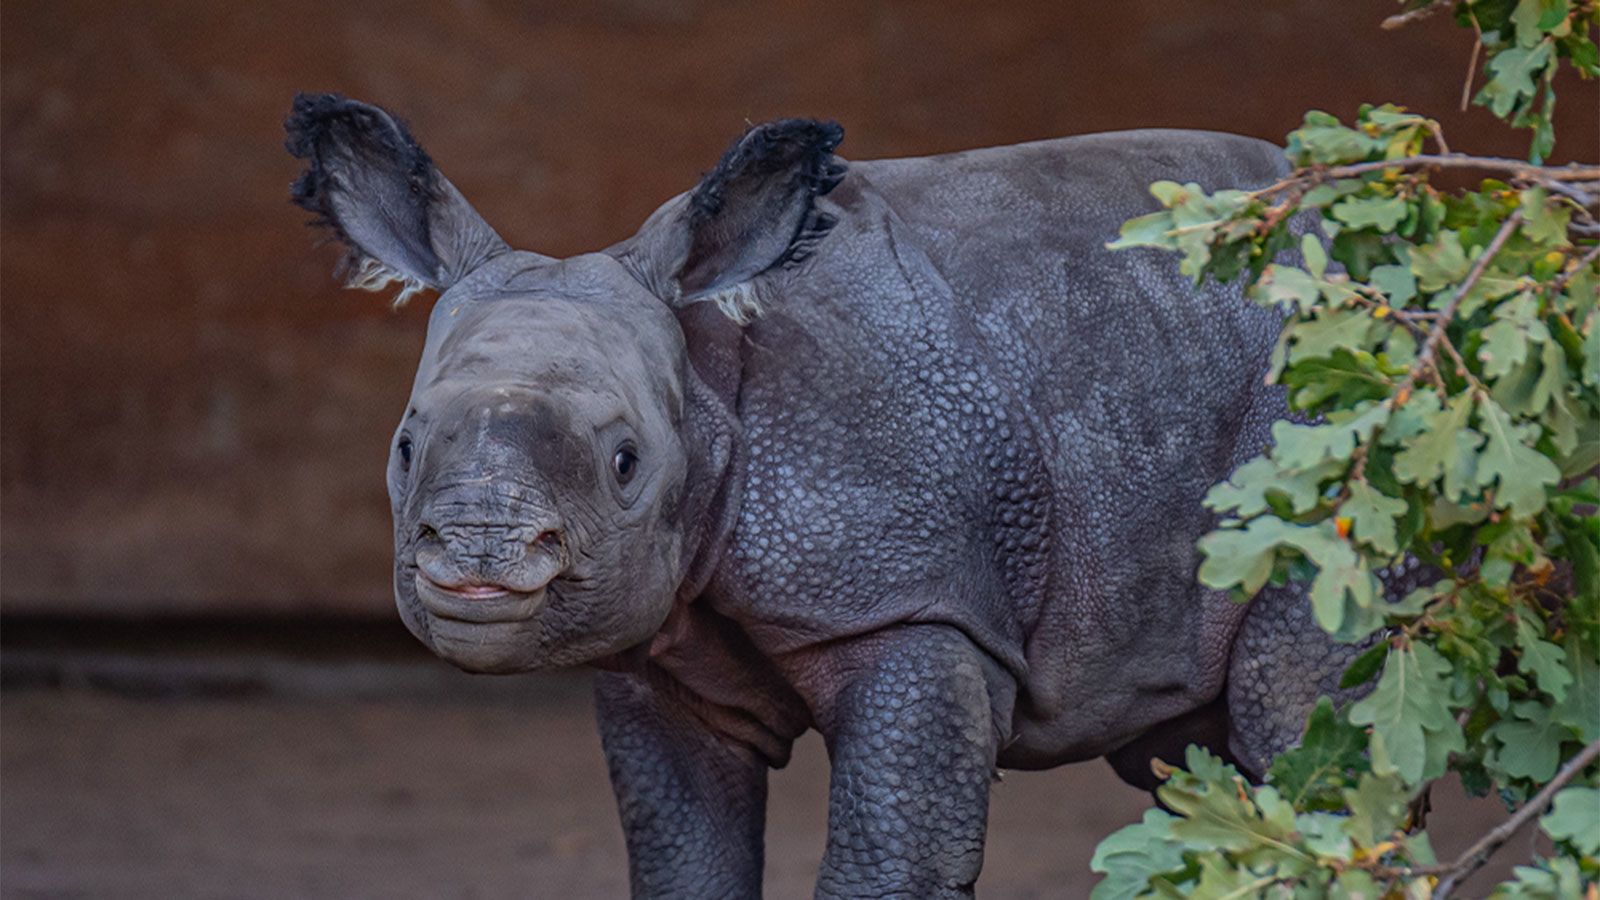 Endangered one-horned rhino calf born at Chester Zoo | CNN